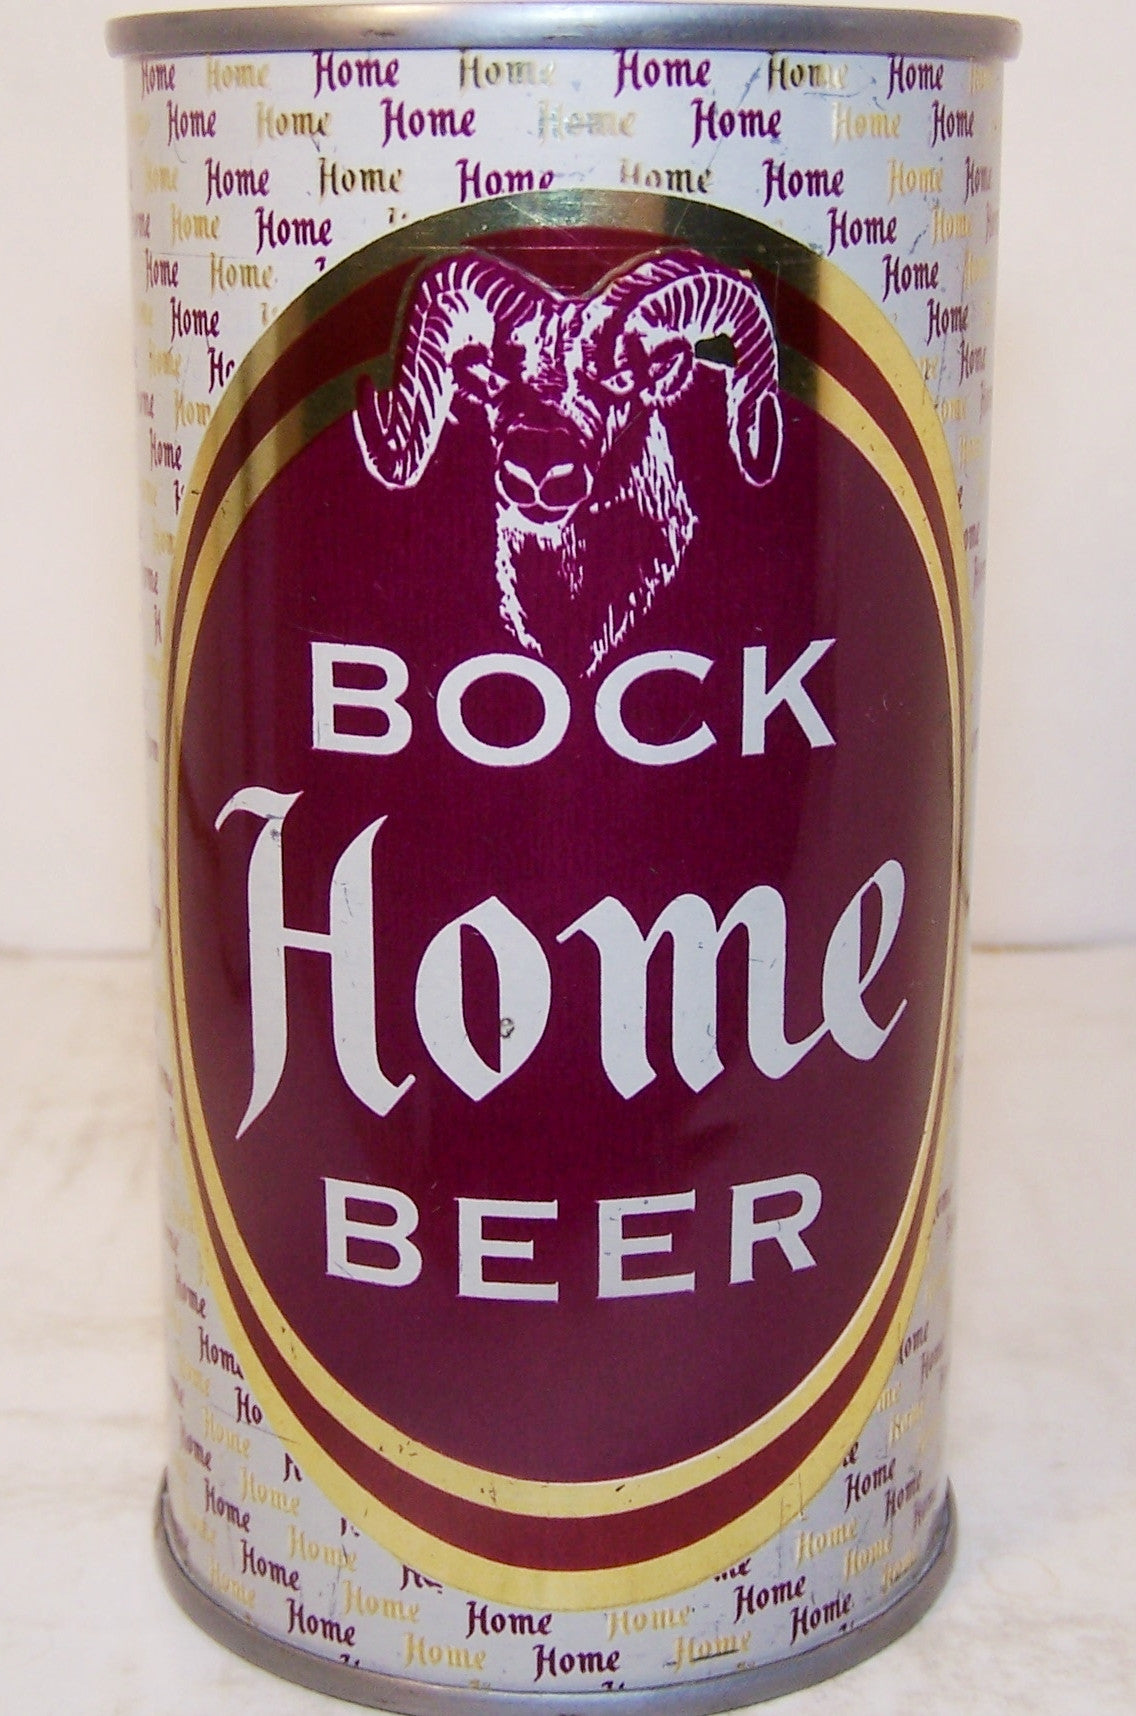 Home Bock Beer, USBC 83-18, Grade 1/1+ Sold on 02/27/16